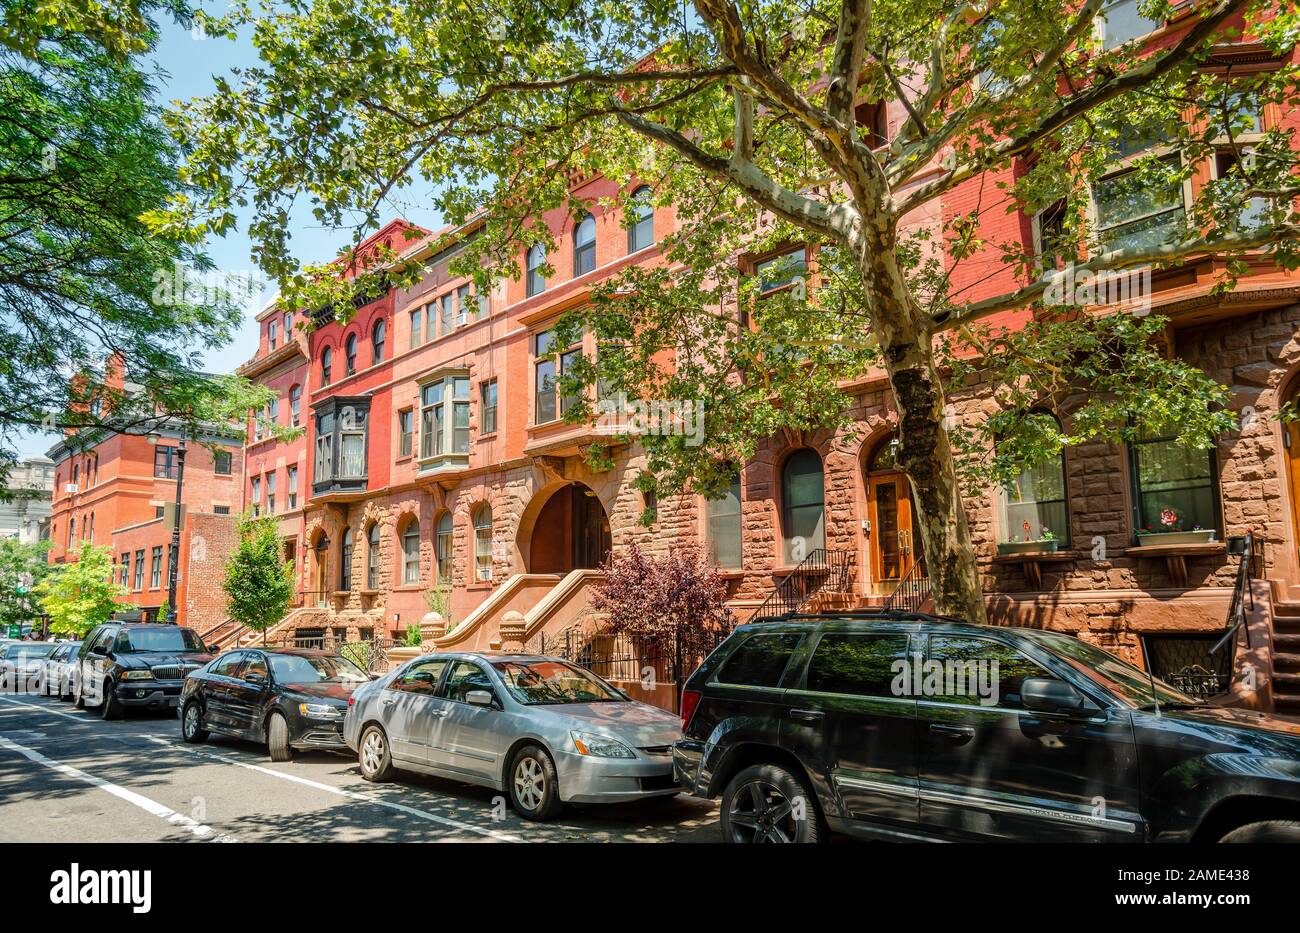 New York, NY / USA - 12 juillet 2014: Vue de 120 Street West, à Harlem, Manhattan.Les bruns dominent l'image. Banque D'Images